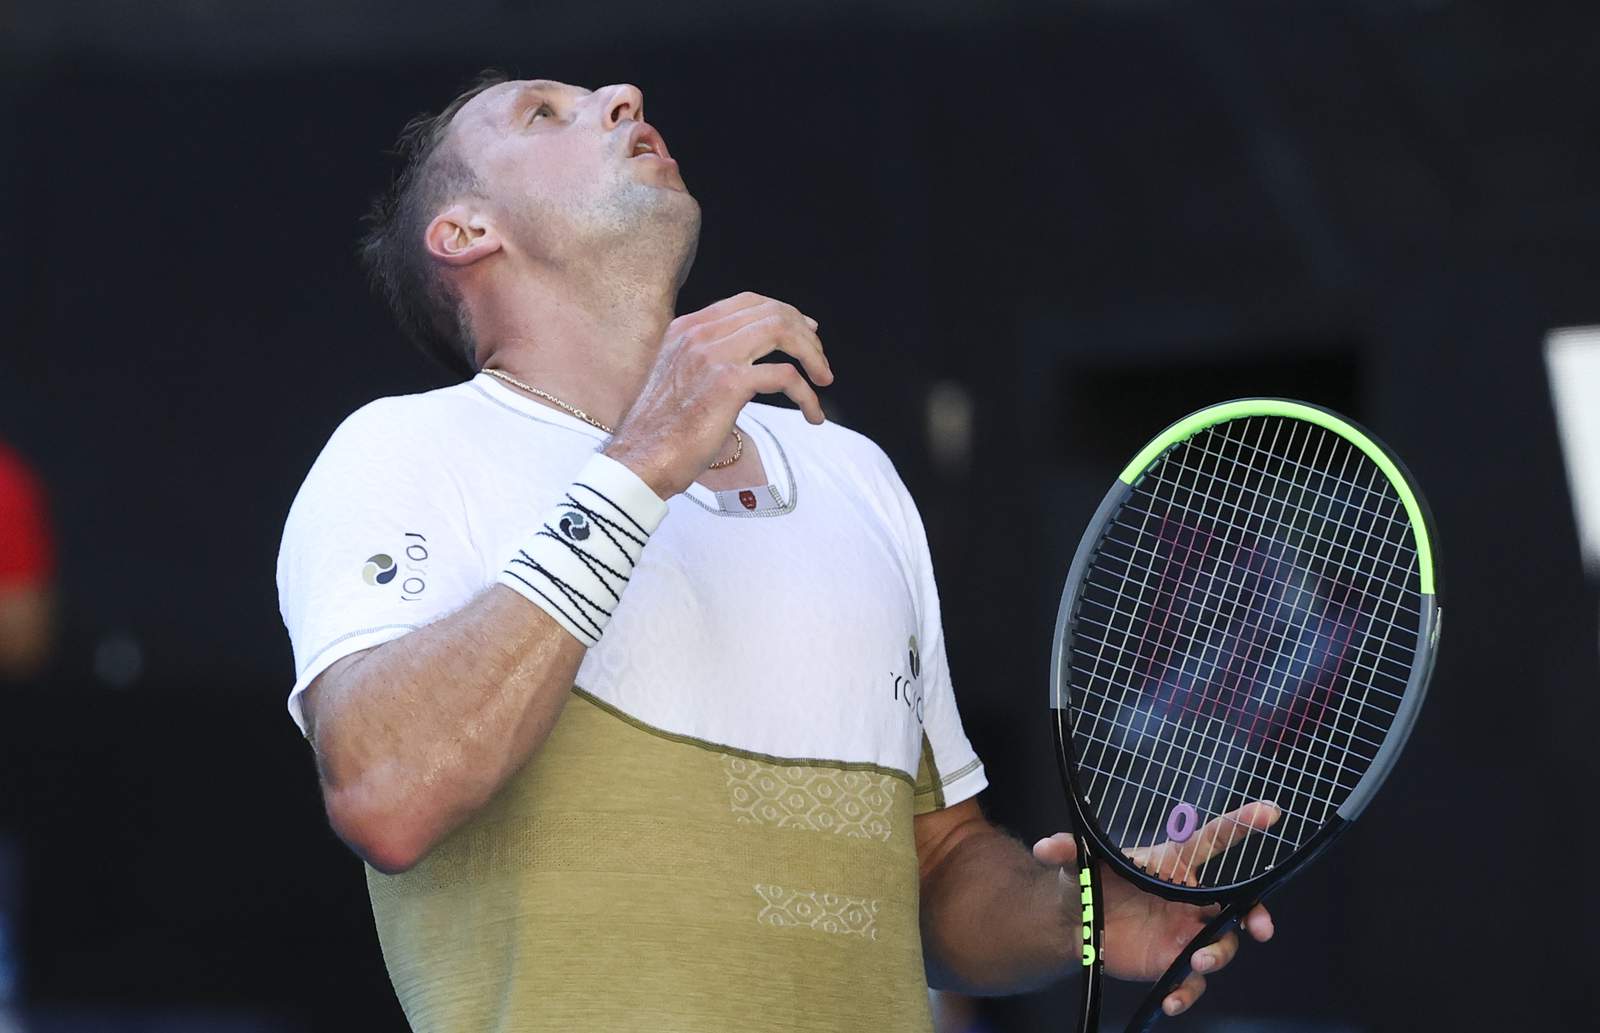 Australian Open's hard quarantine 'took a toll' on players